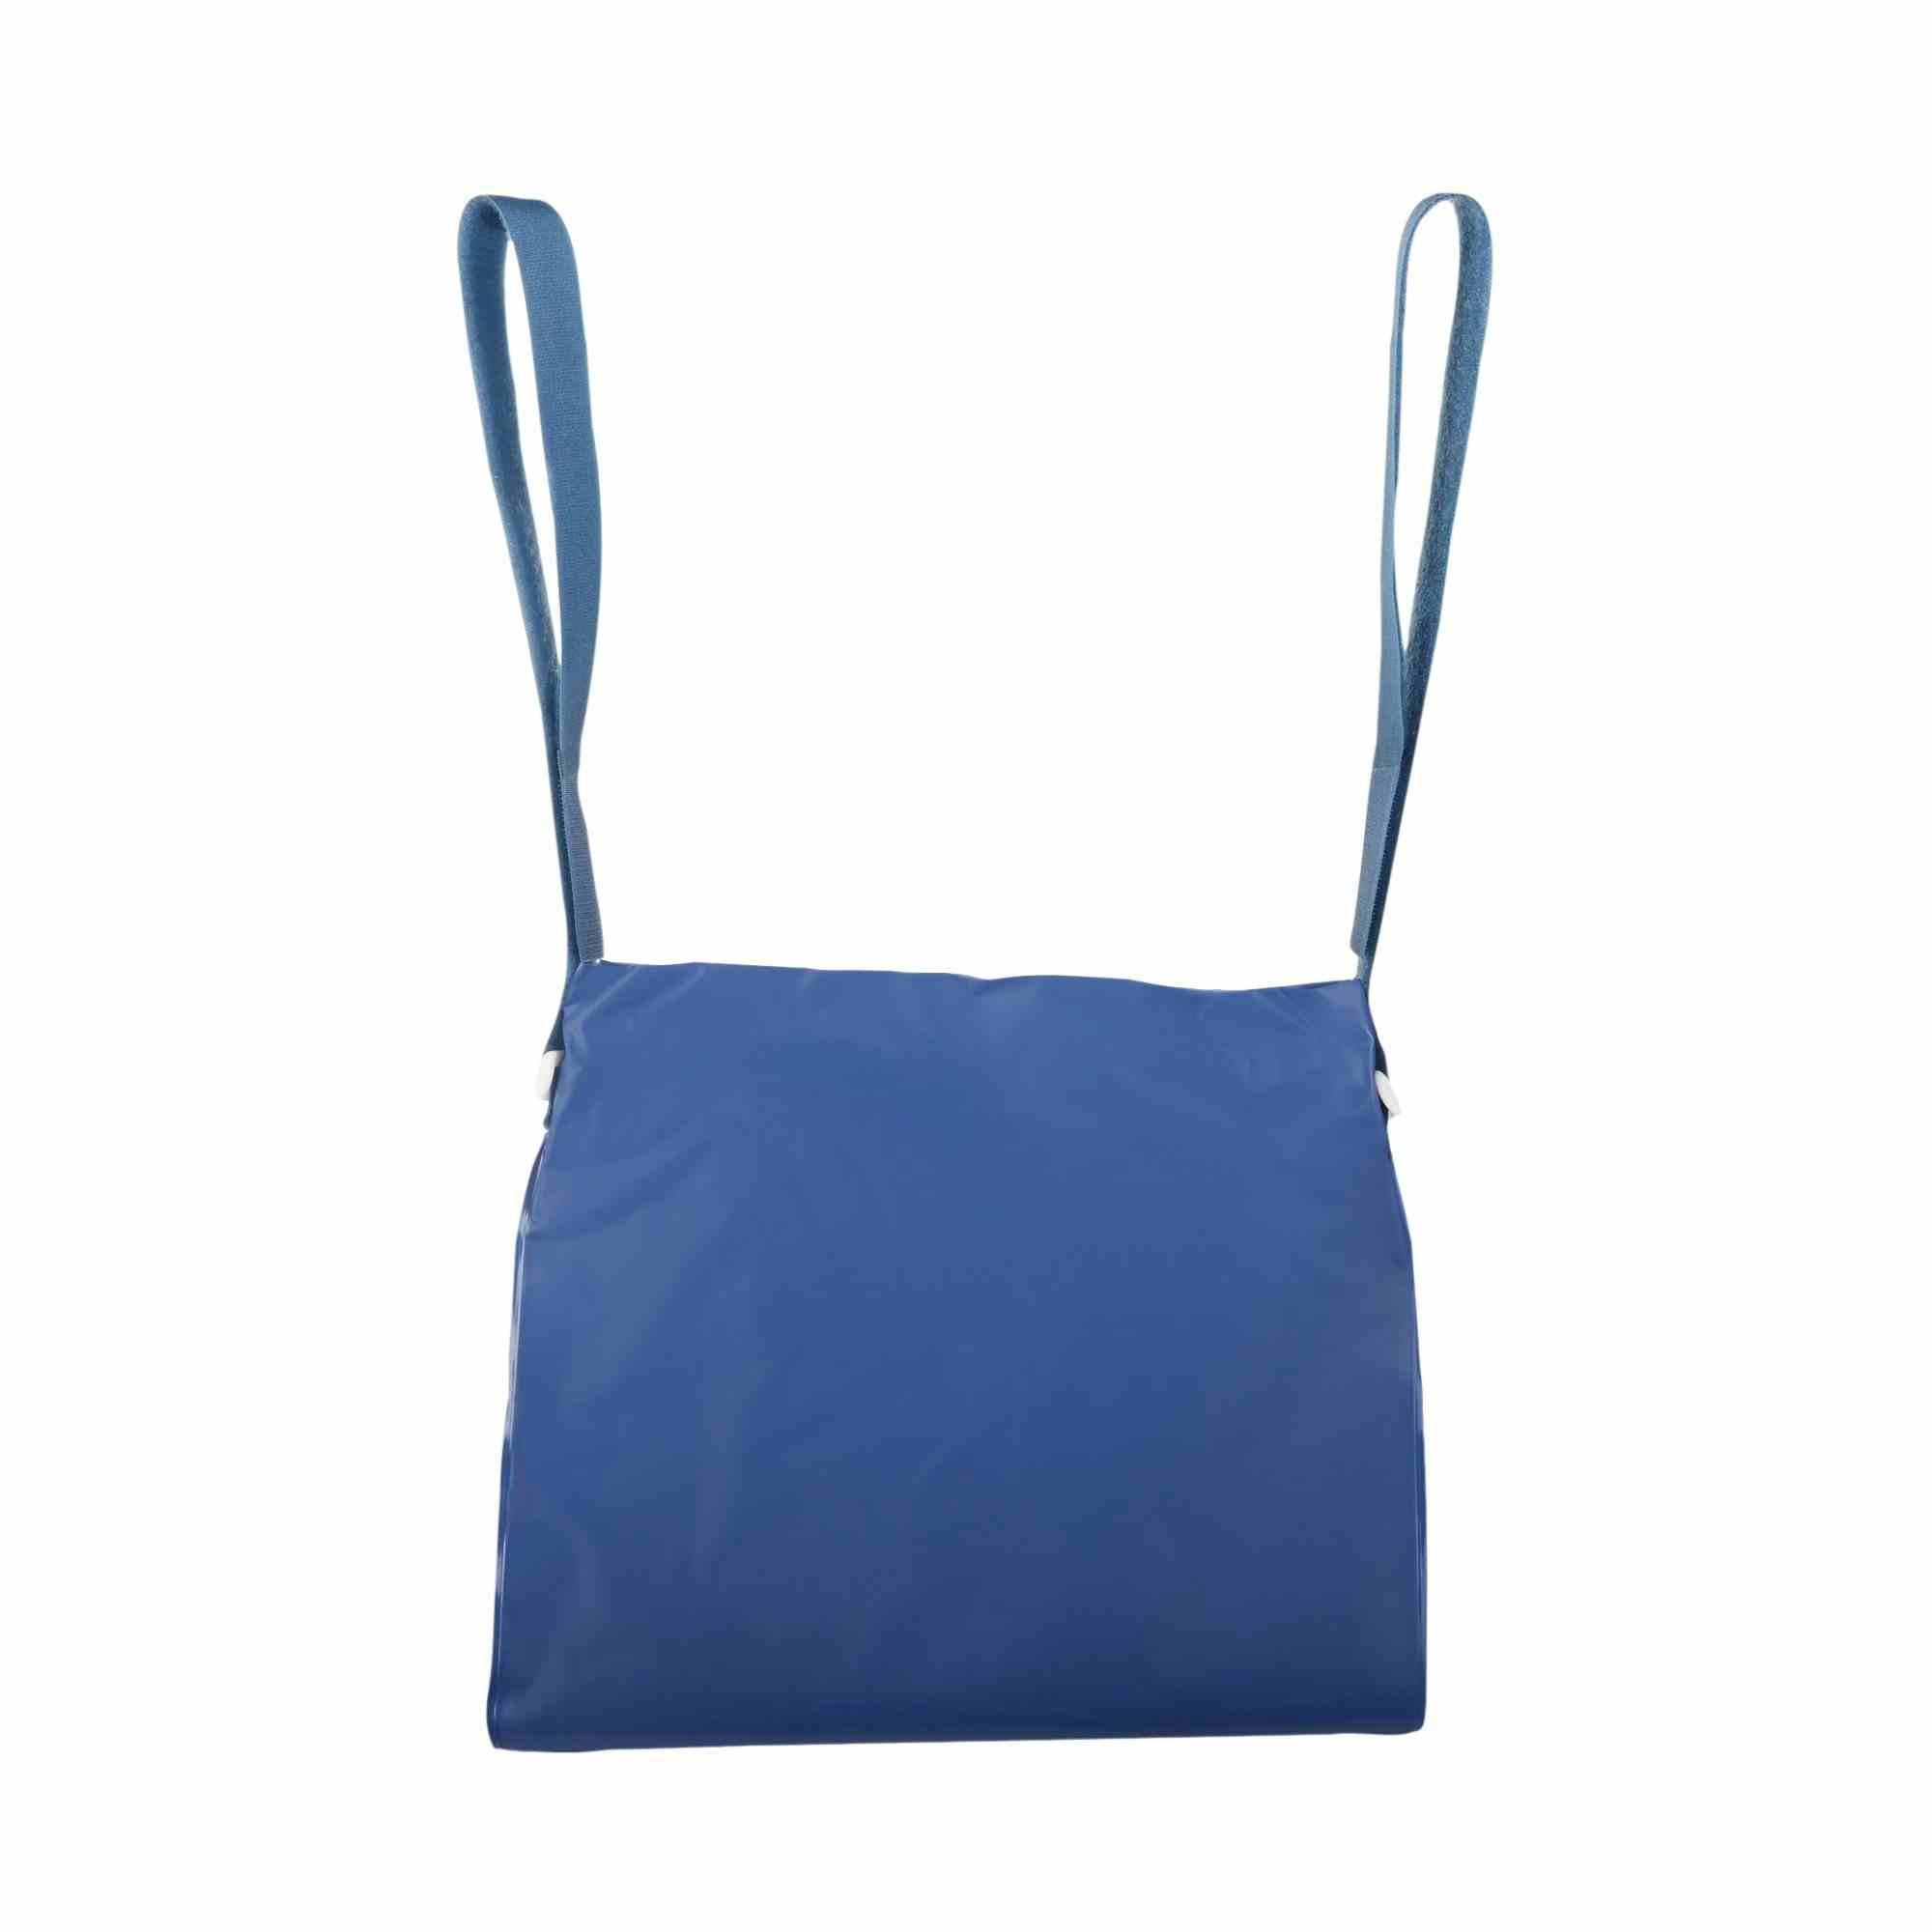 McKesson Urinary Bag Drainage Holder, Adjustable Straps, Navy Blue, 16-5515, 1 Each